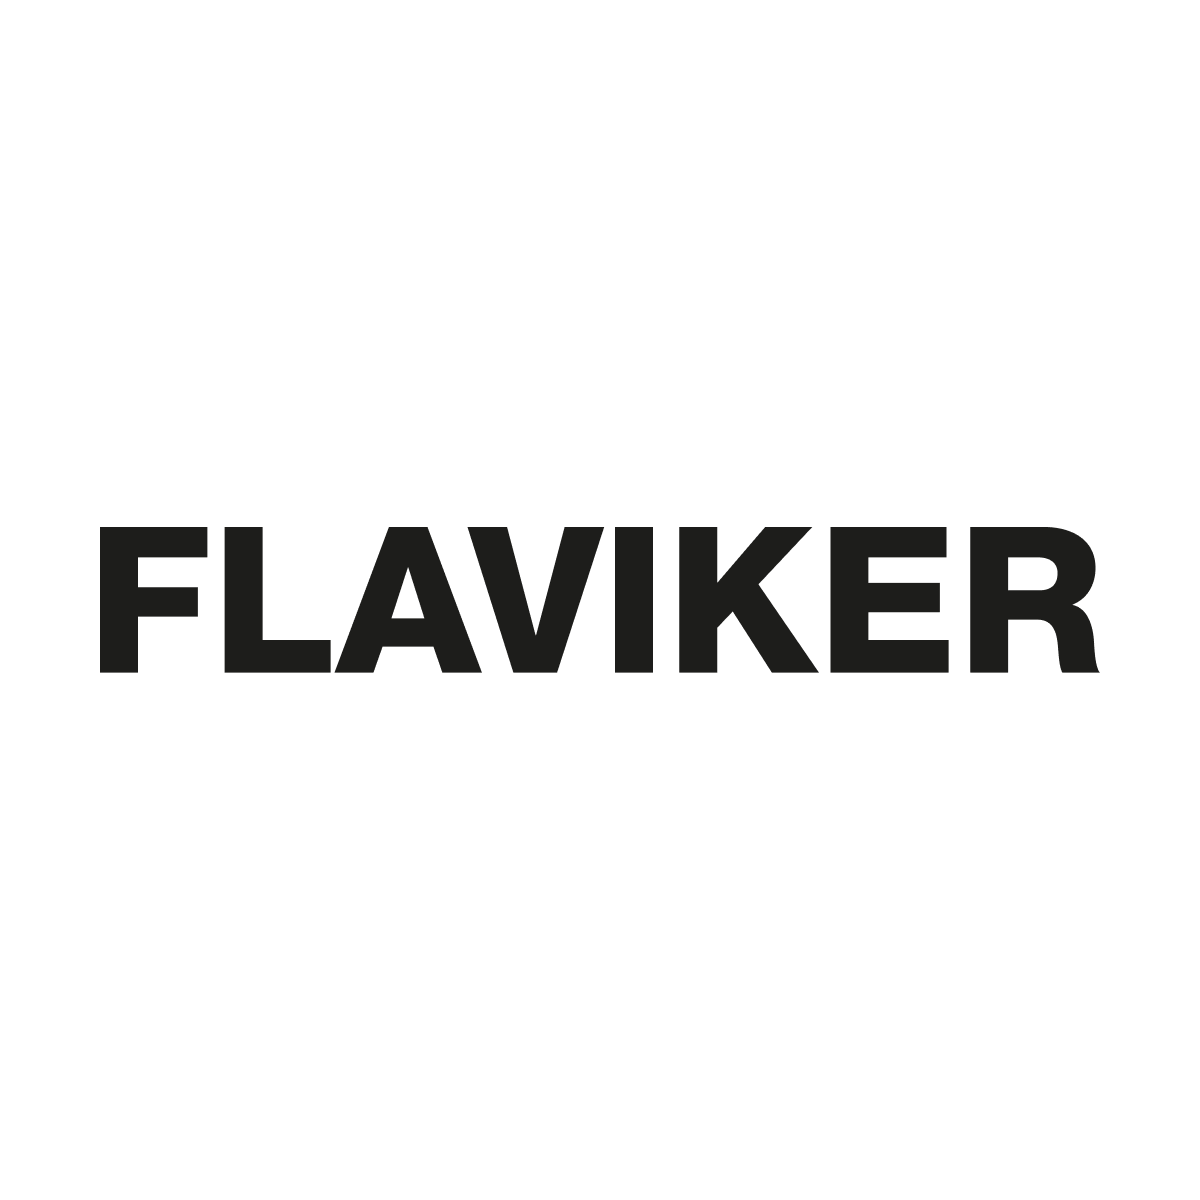 Logo Flaviker